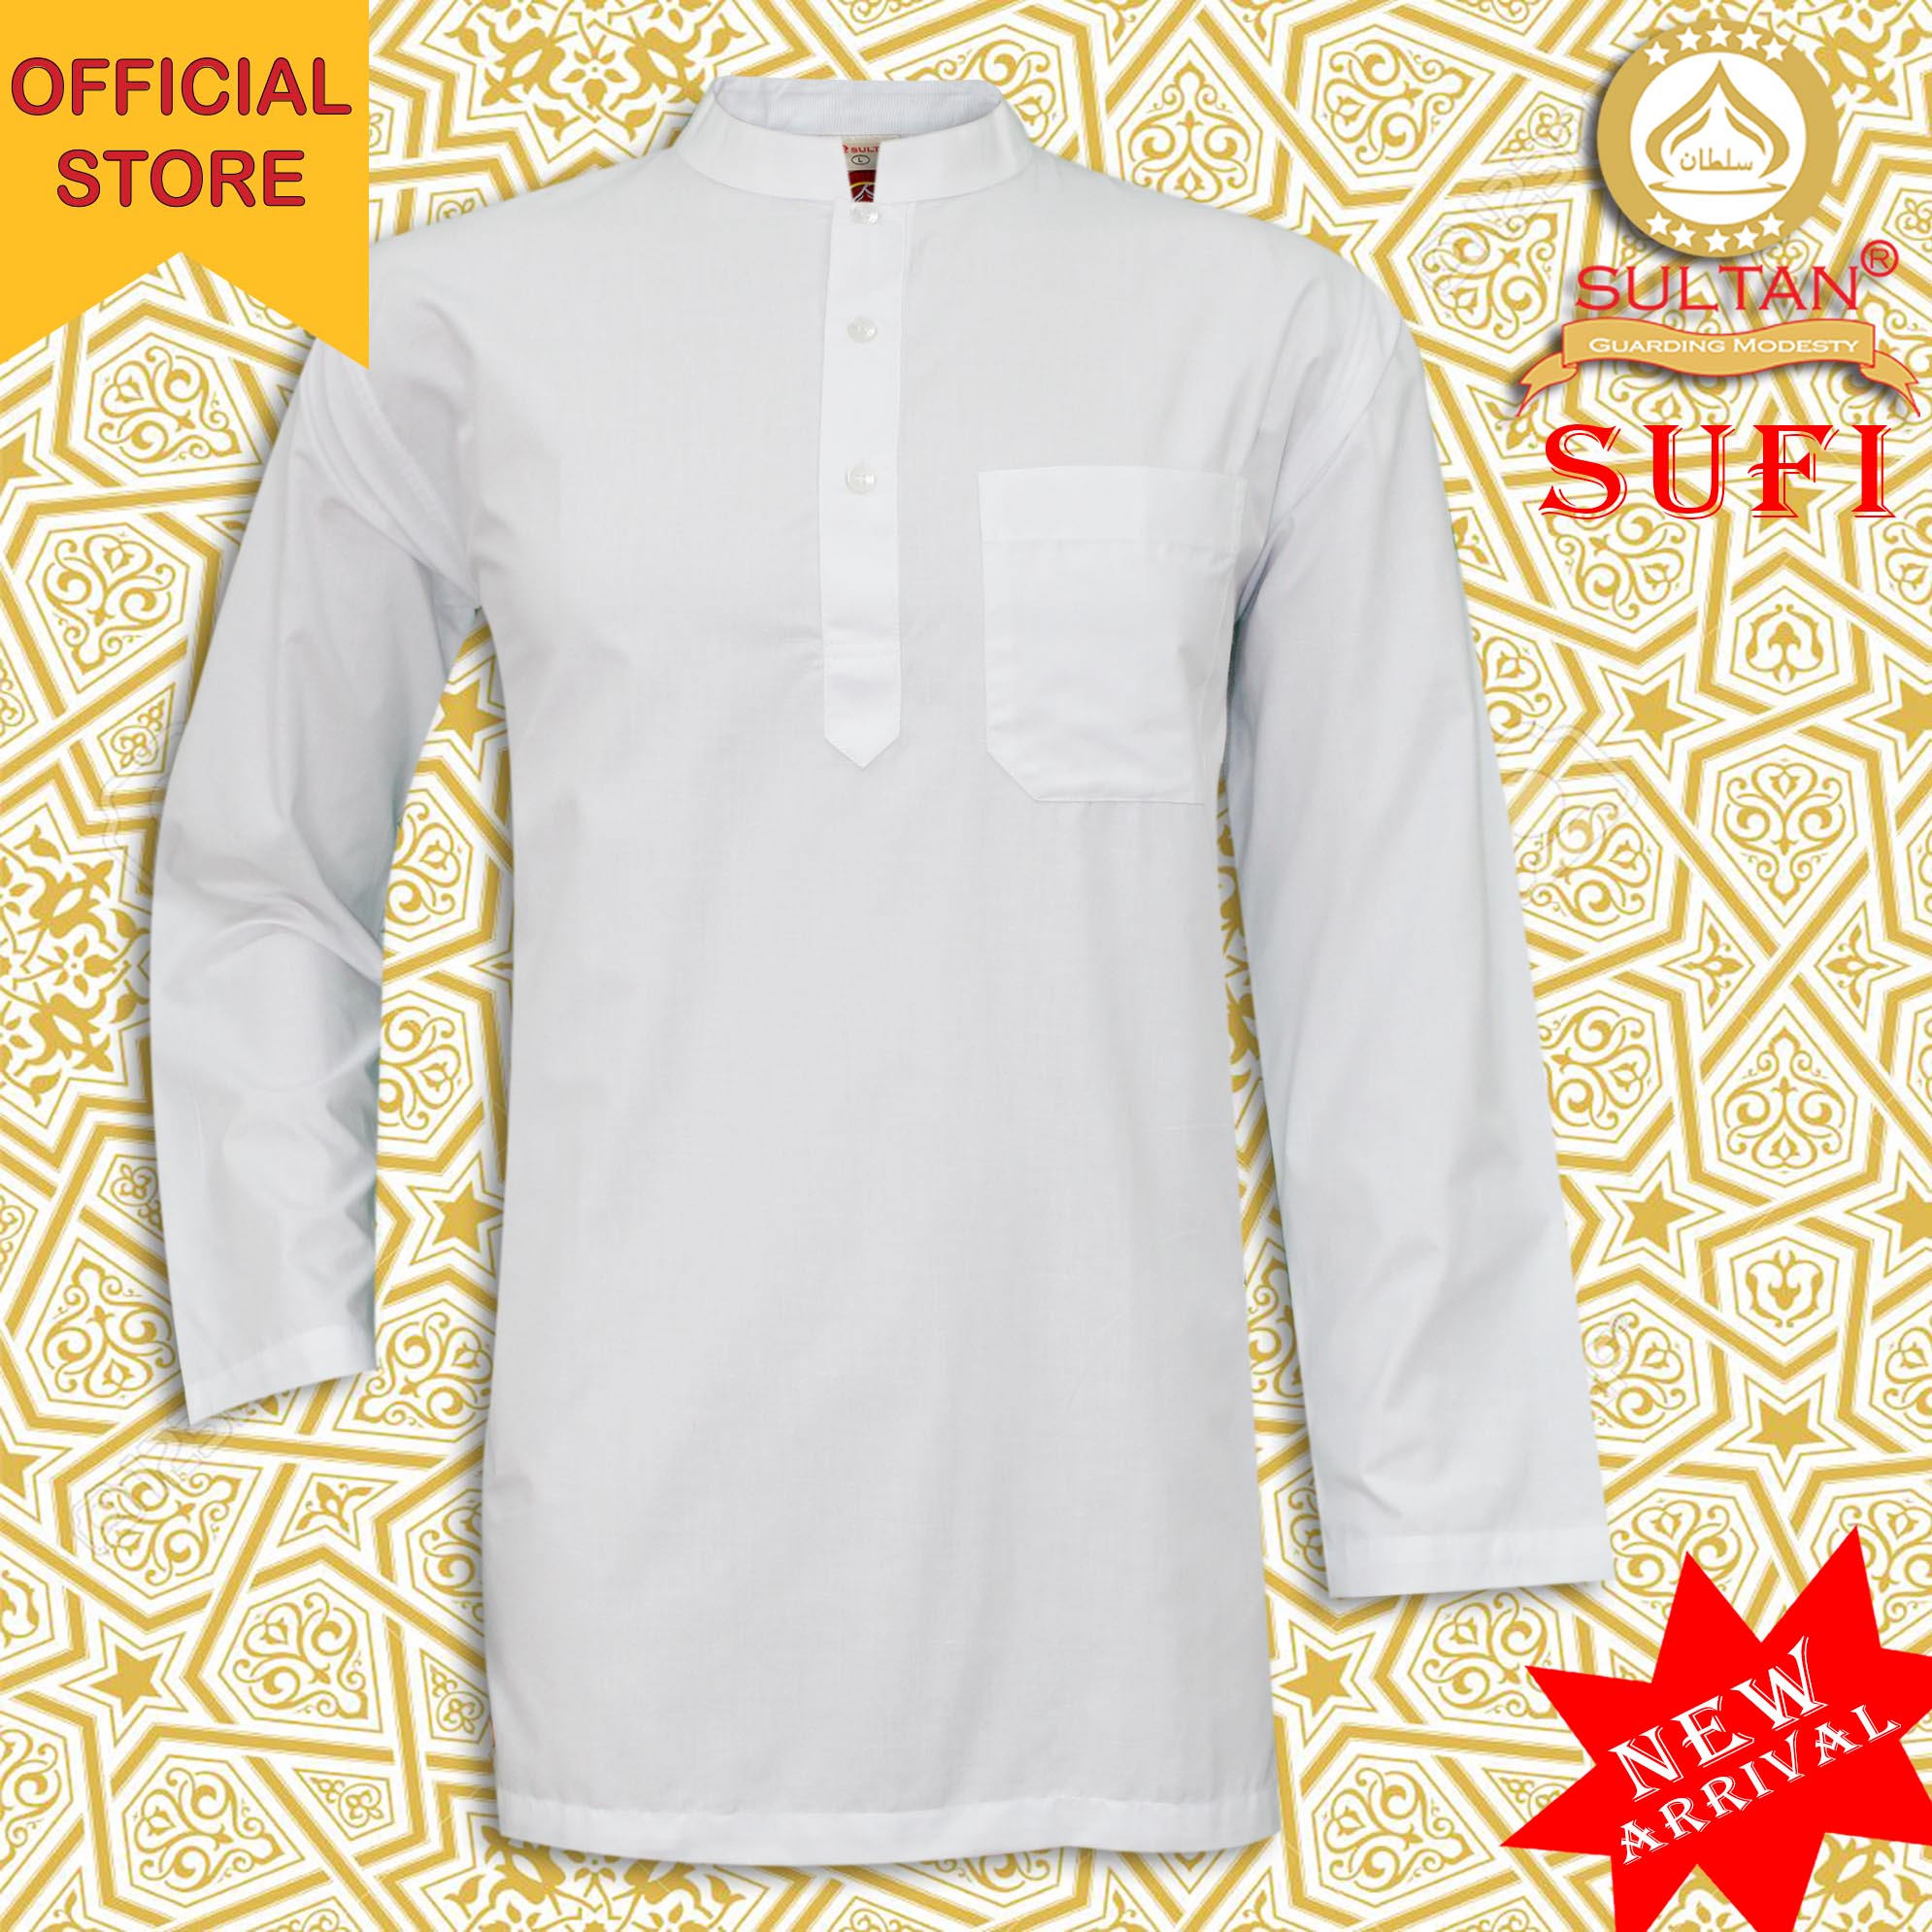 sultan kurta - Muslimin Wear Prices and Promotions - Muslim 